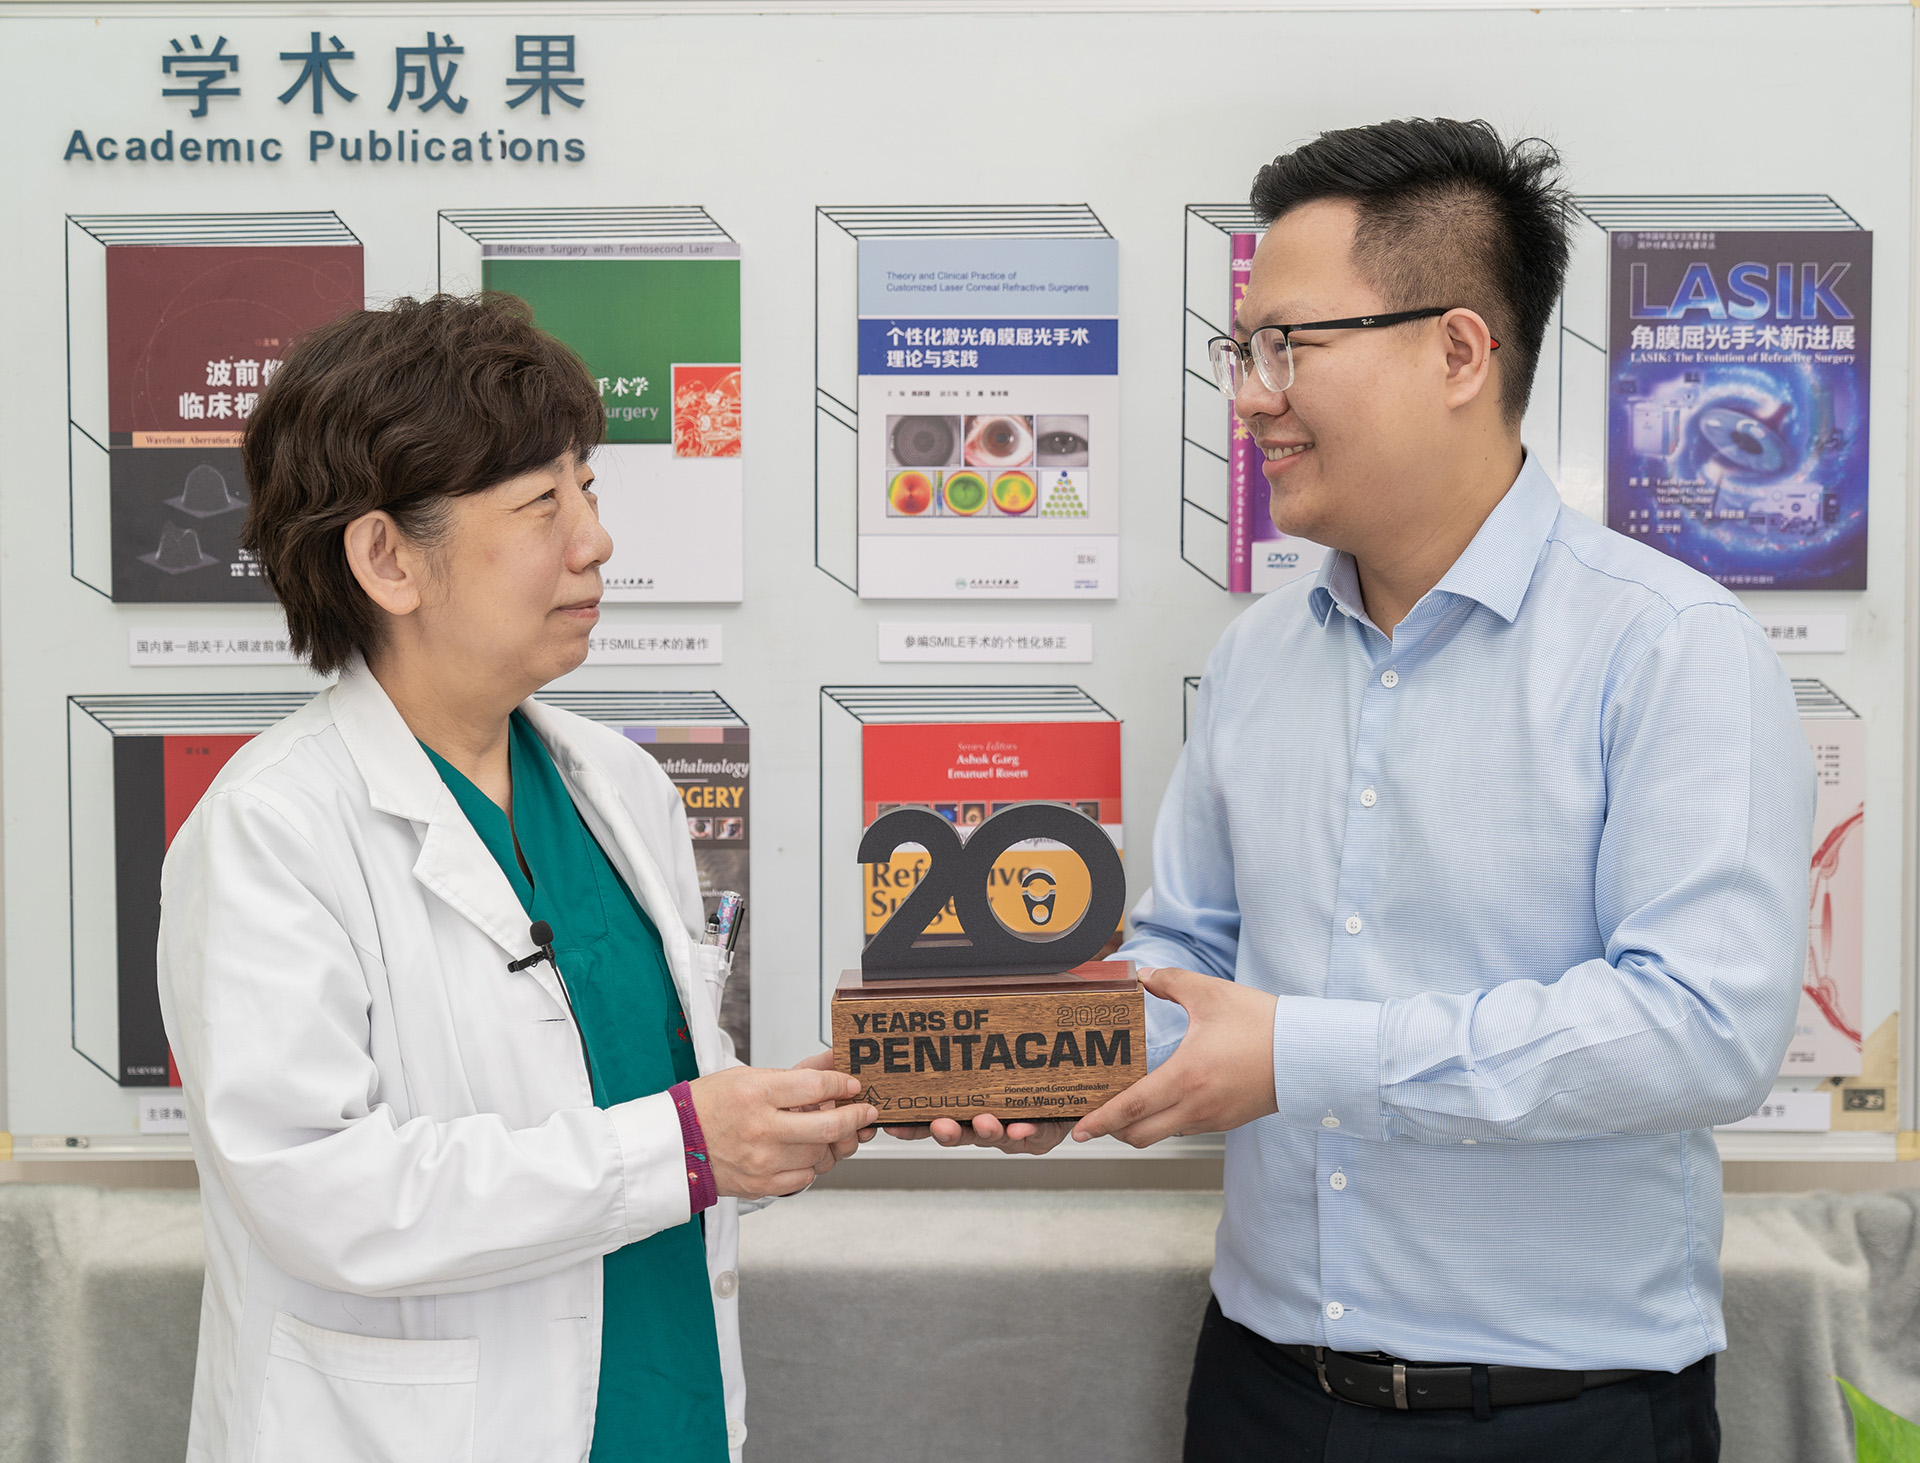 Prof Wang Yan (left) receives the Pentacam® 20th Anniversary Trophy from DMK’s representative Li Wei (right)